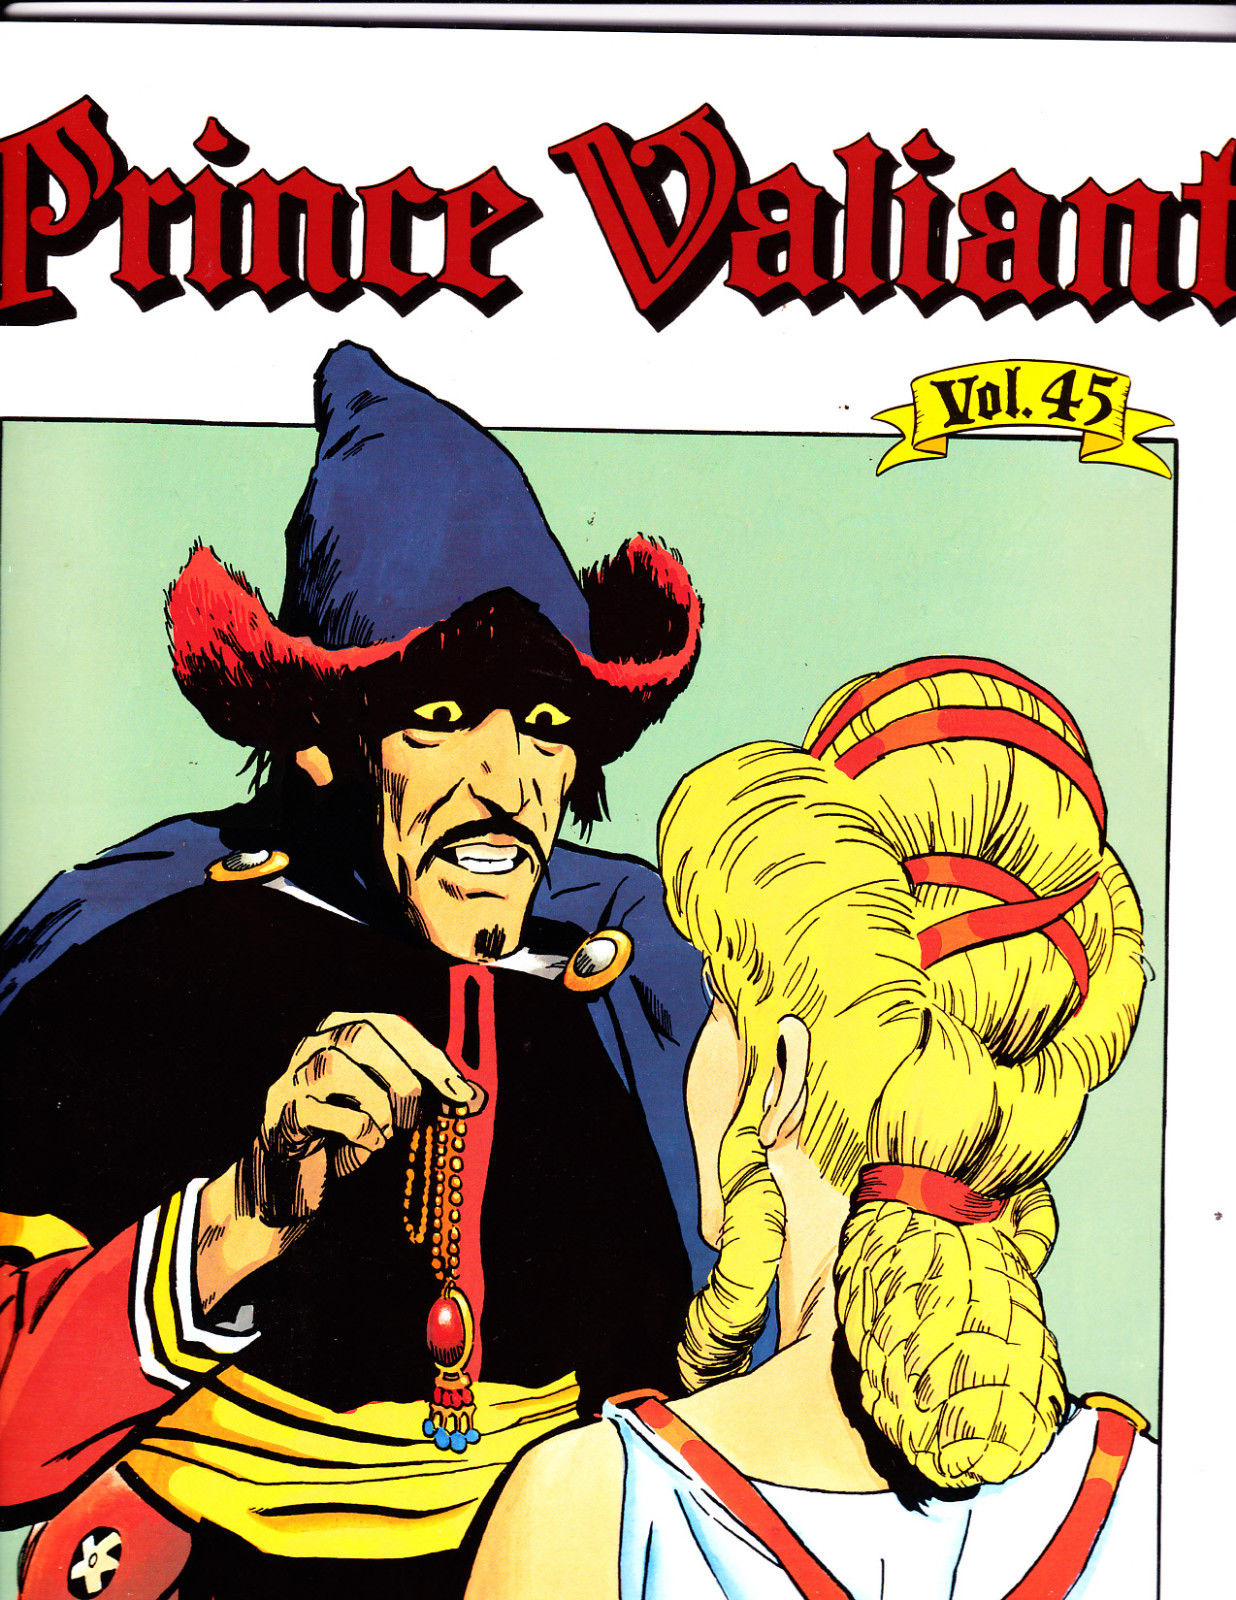 Prince Valiant Vol 45-2002-Strip Reprints Soft Cover-